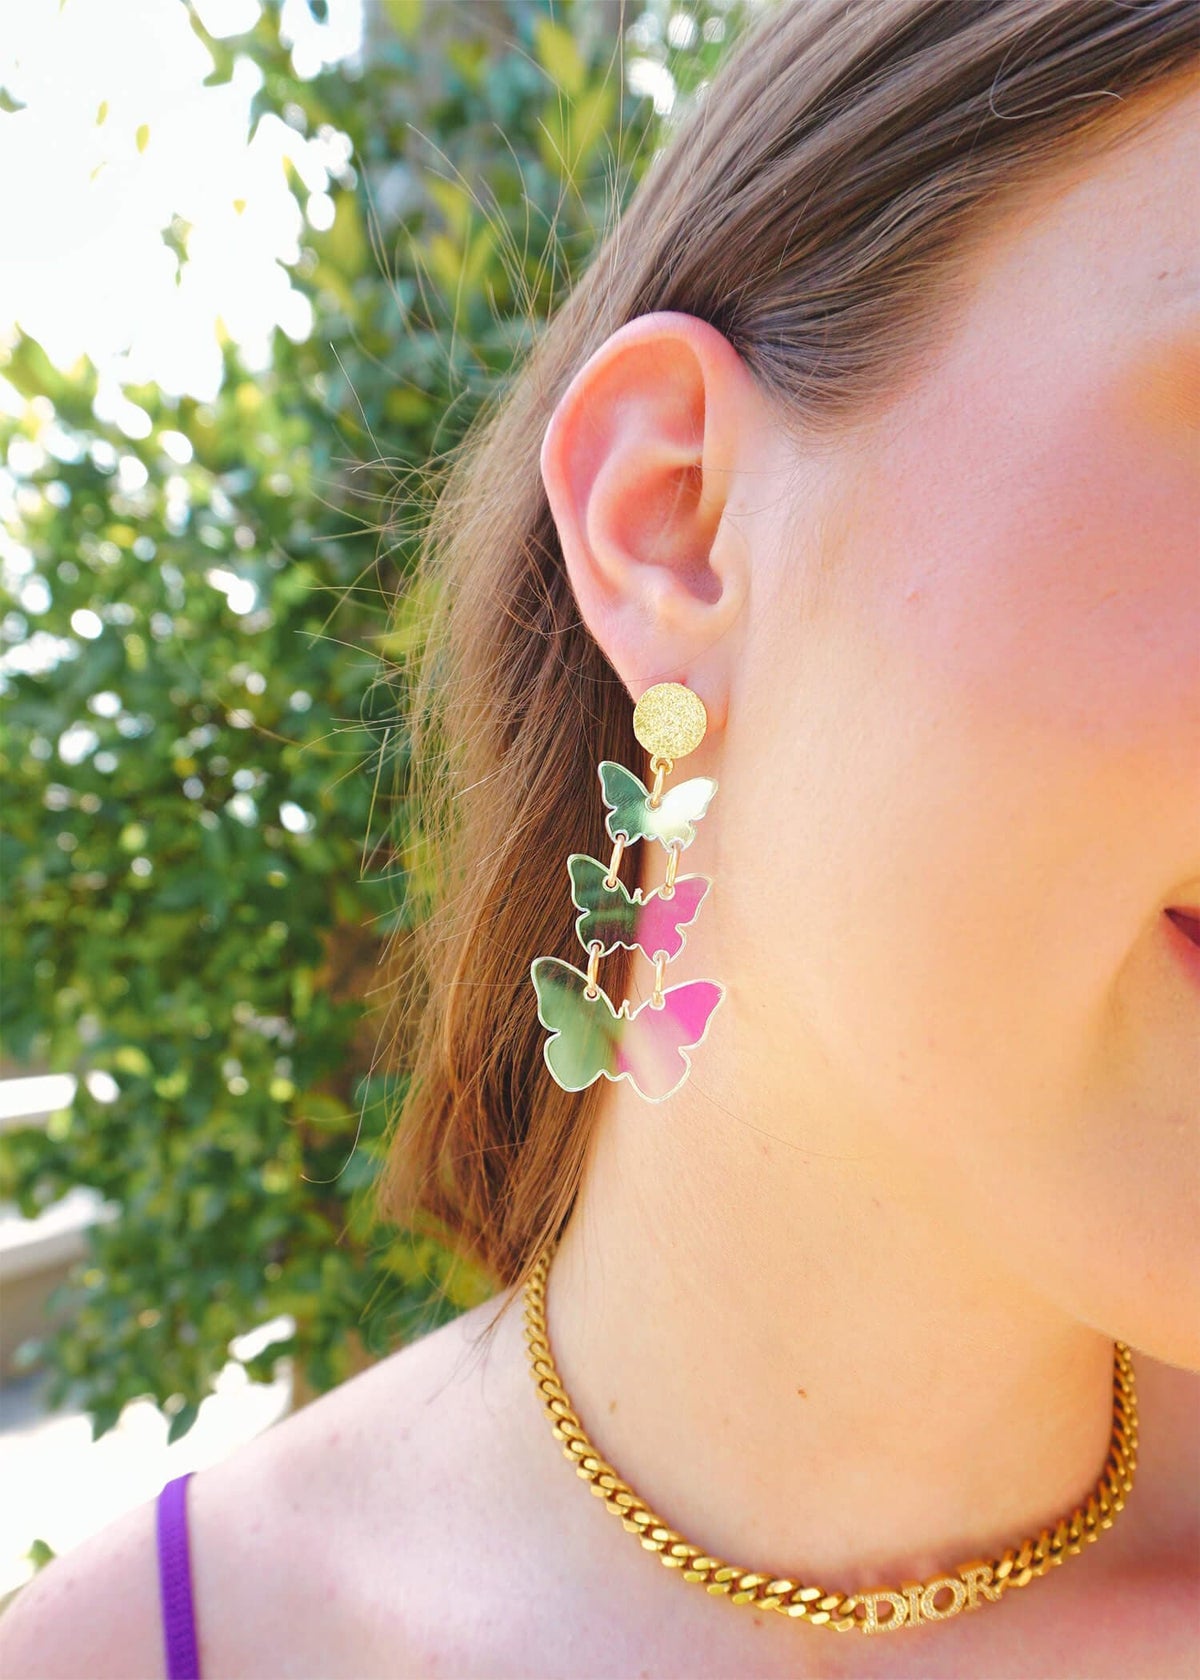 Searching For Butterflies Earrings - Iridescent Earrings MerciGrace Boutique.